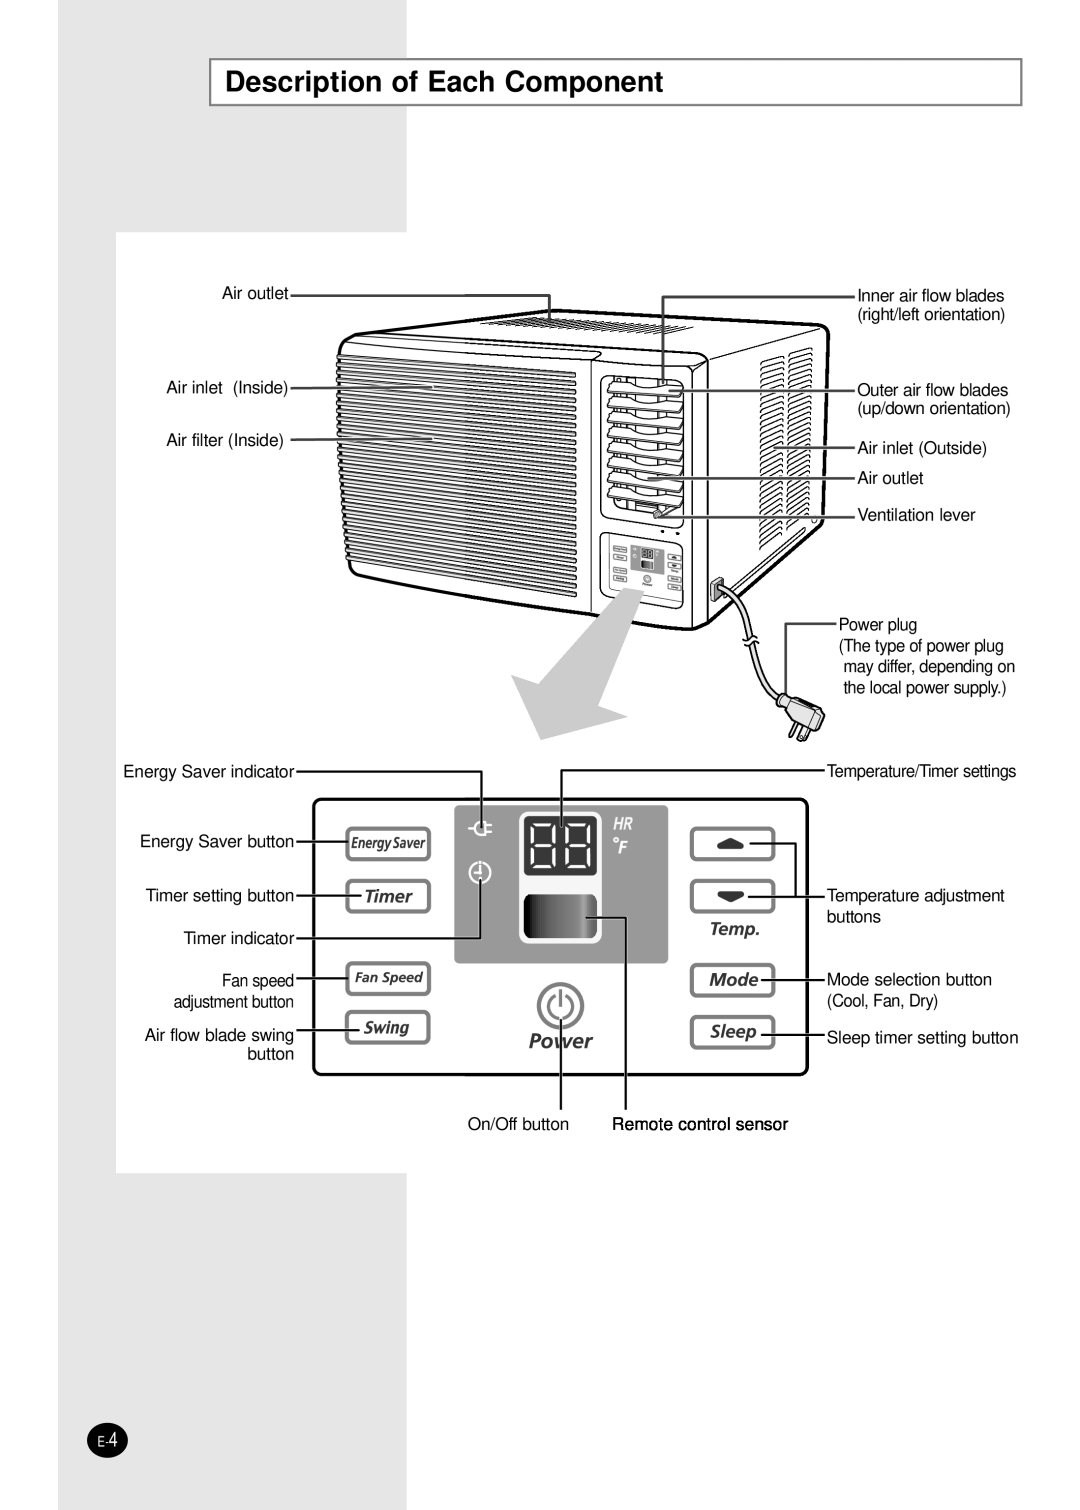 Samsung AW2400B manual Description of Each Component 